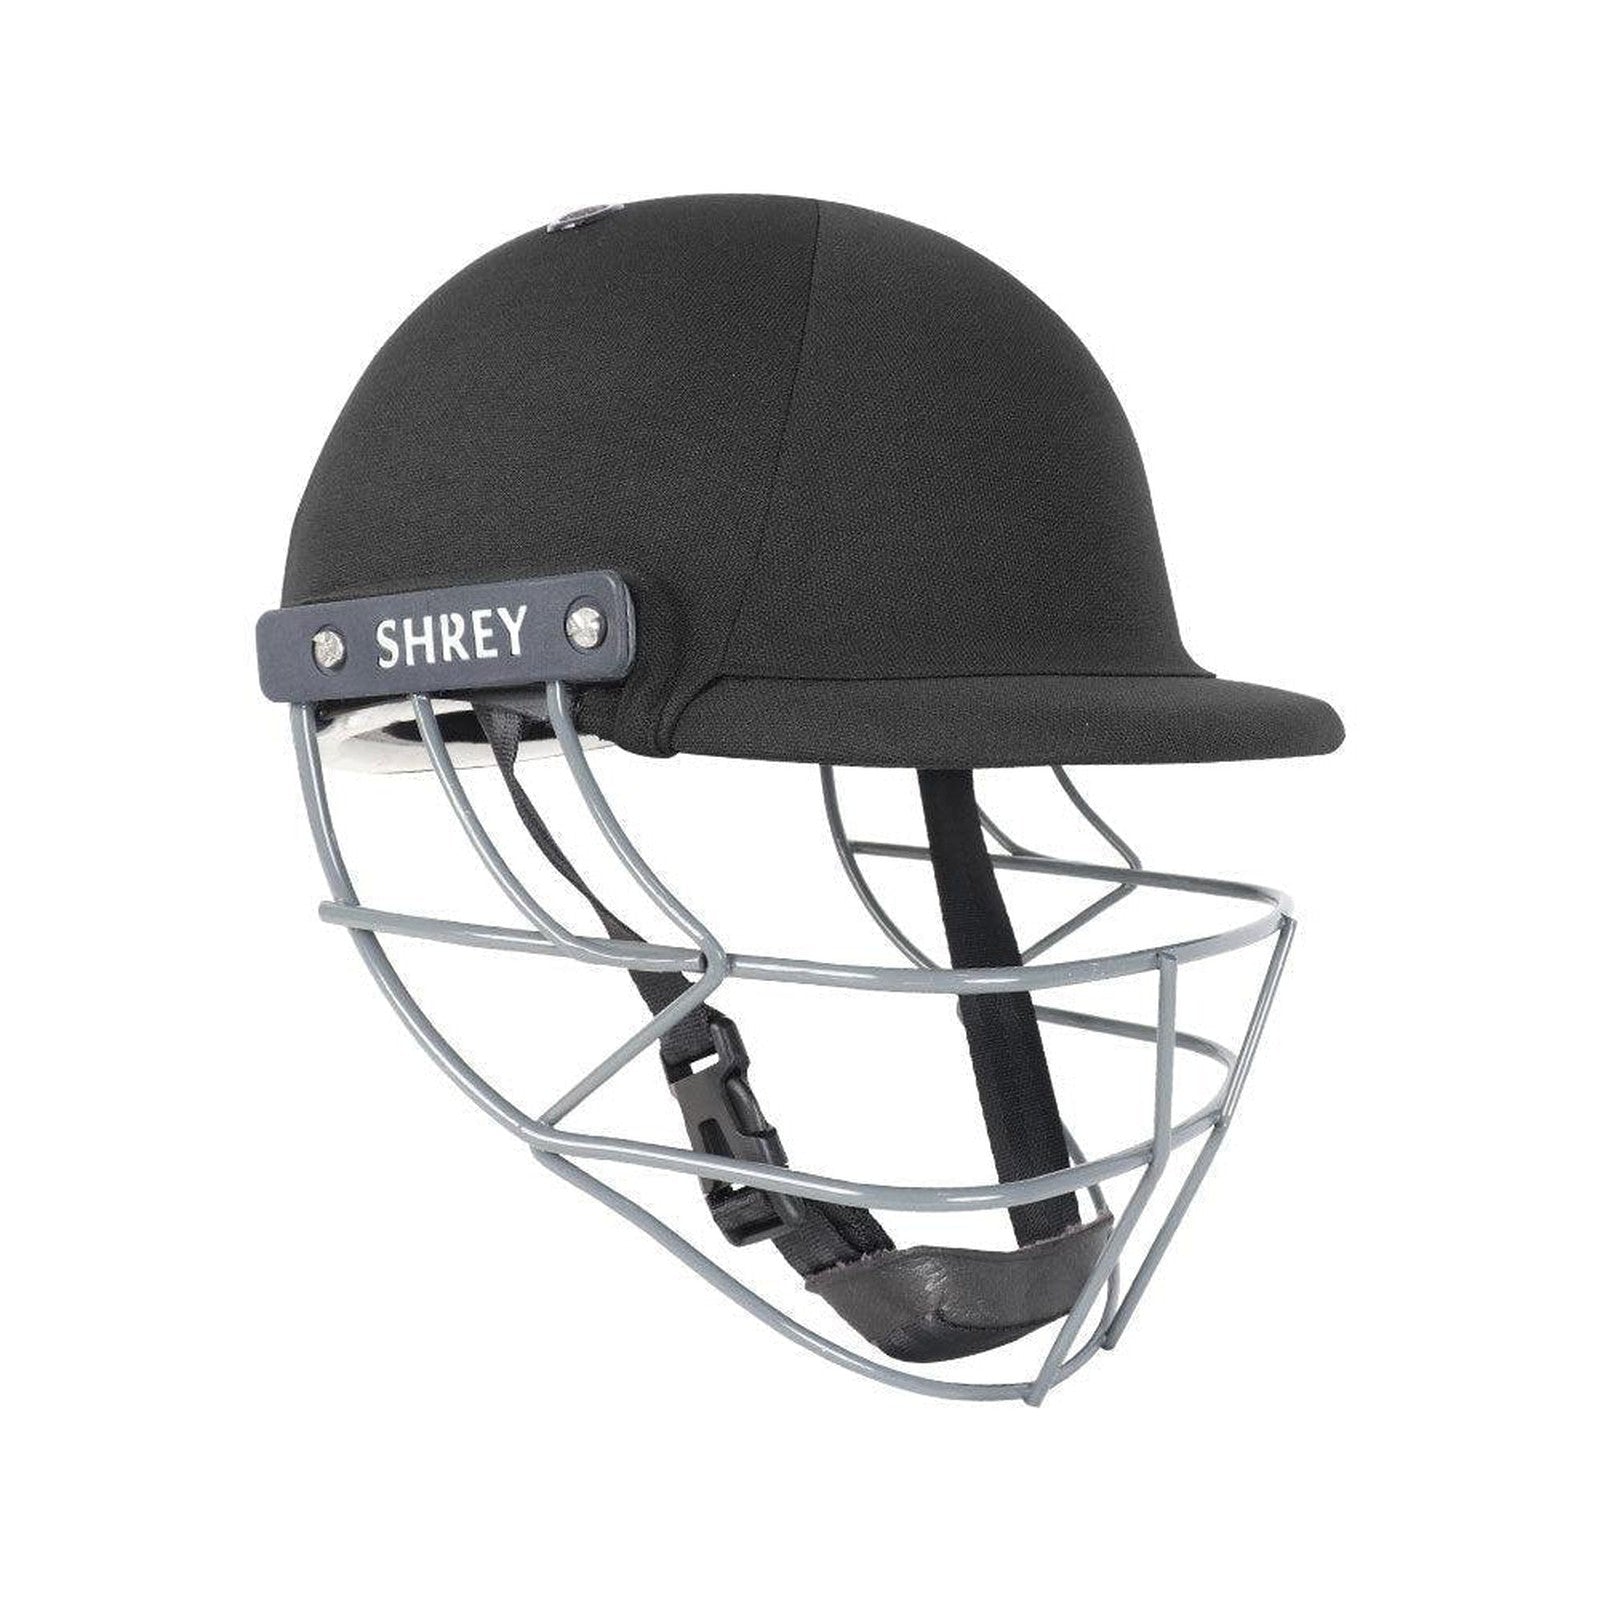 Shrey Performance 2.0 Cricket Helmet With Mild Steel - Black Youth